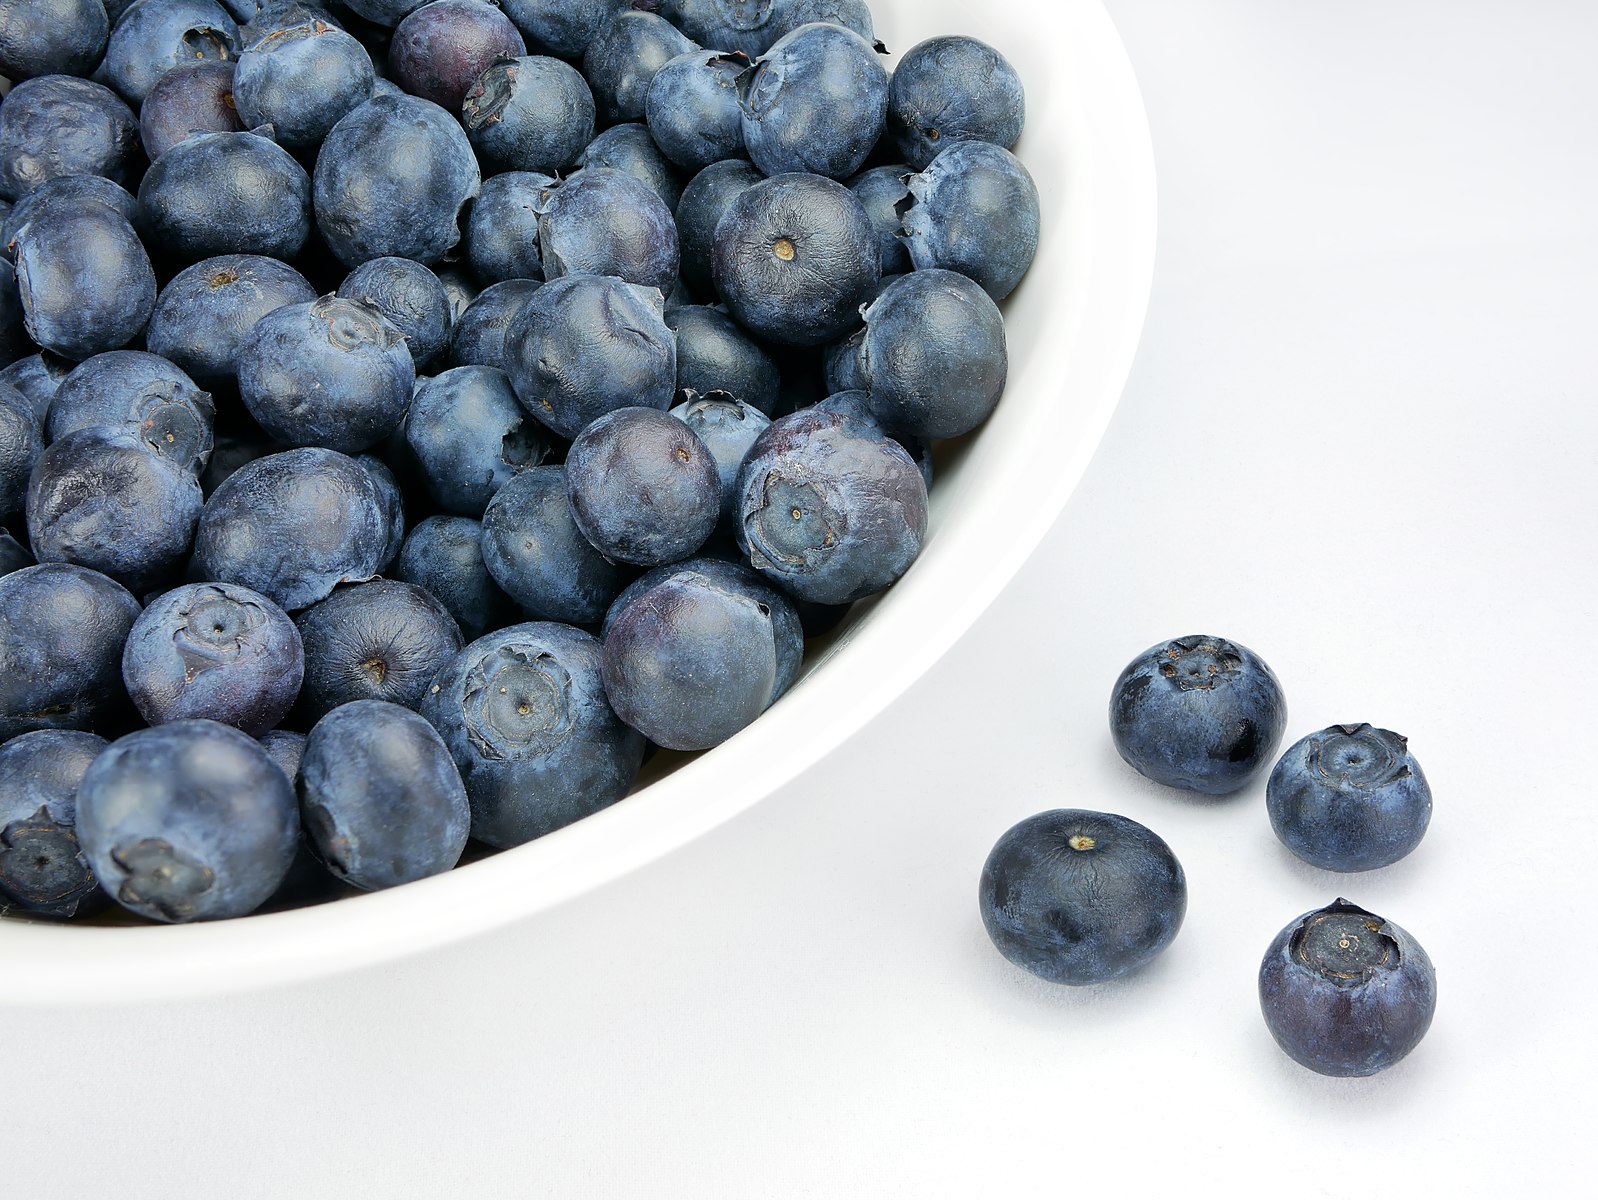 《Nutrient》：经常吃蓝莓可能会降低患痴呆症的风险